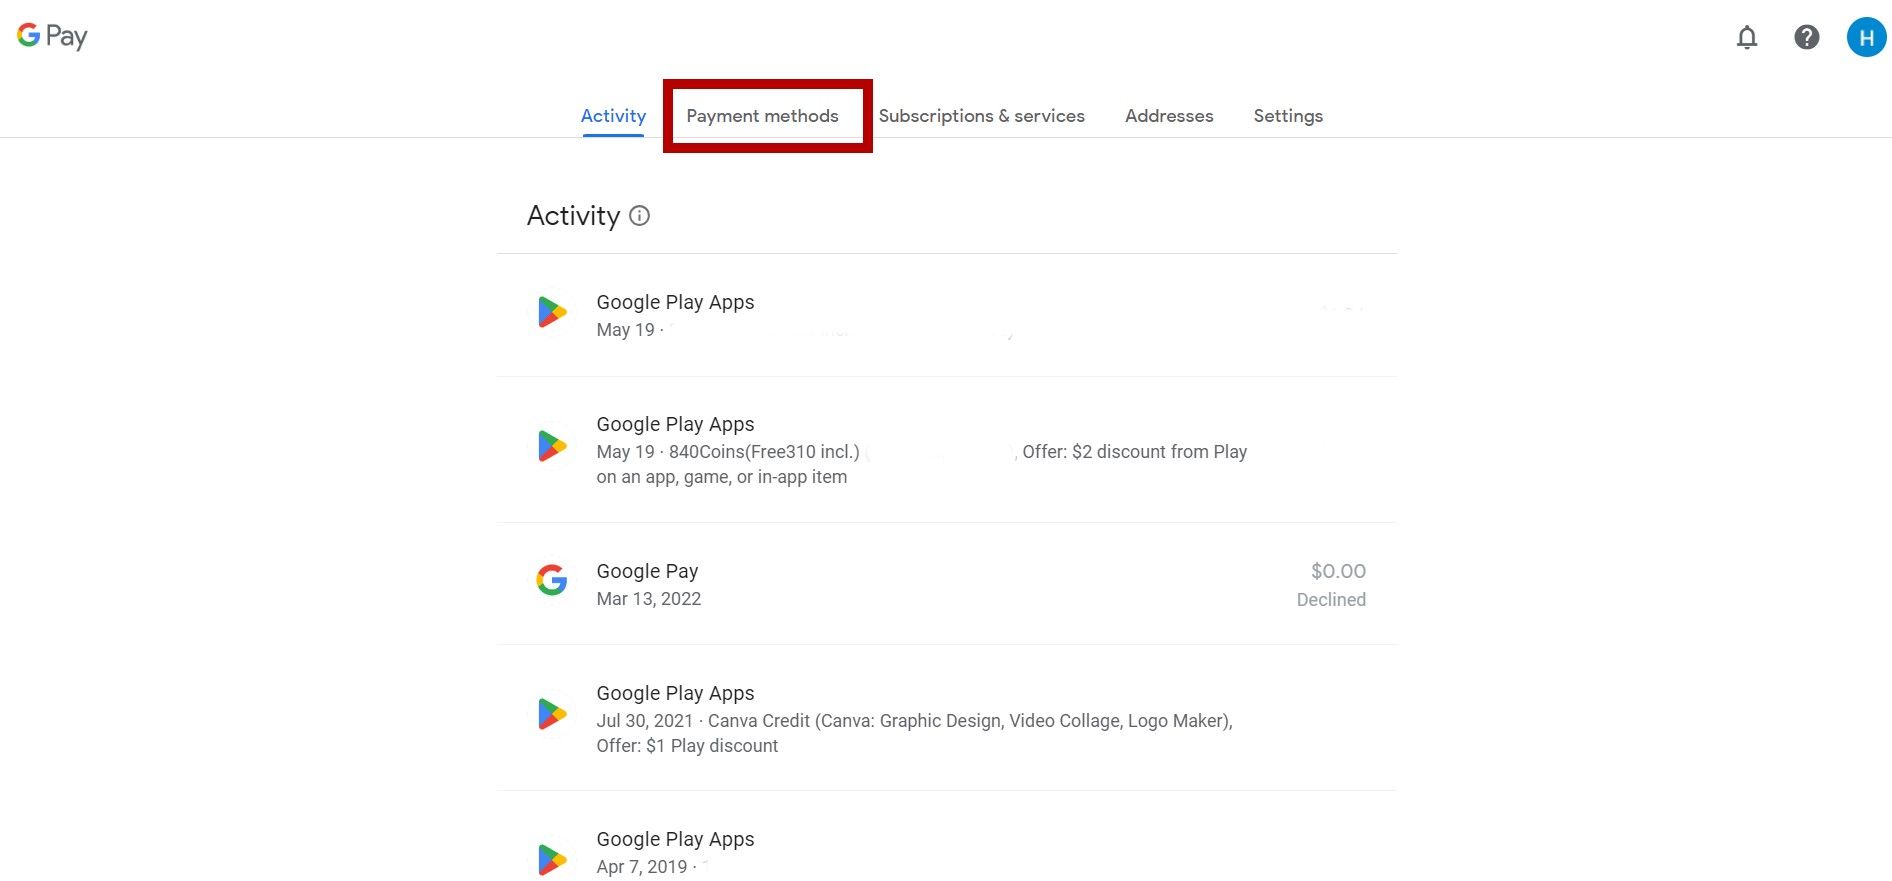 Google Pay homepage